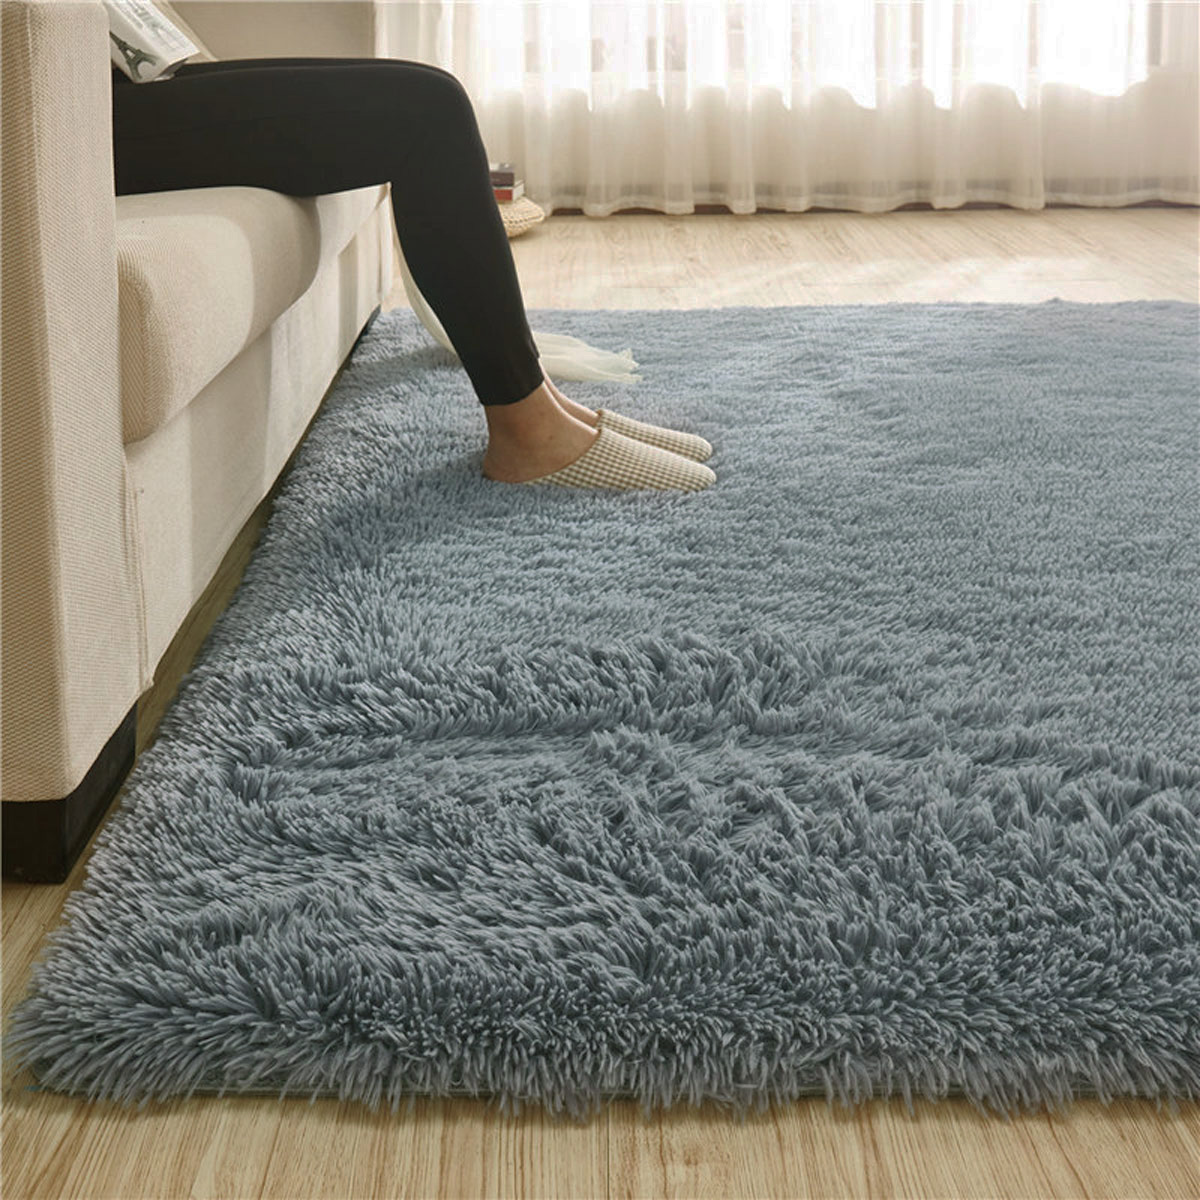 160x230CM Fluffy Rug Anti-Skid Shaggy Area Rug Dining Room Carpet Floor Mat Home 